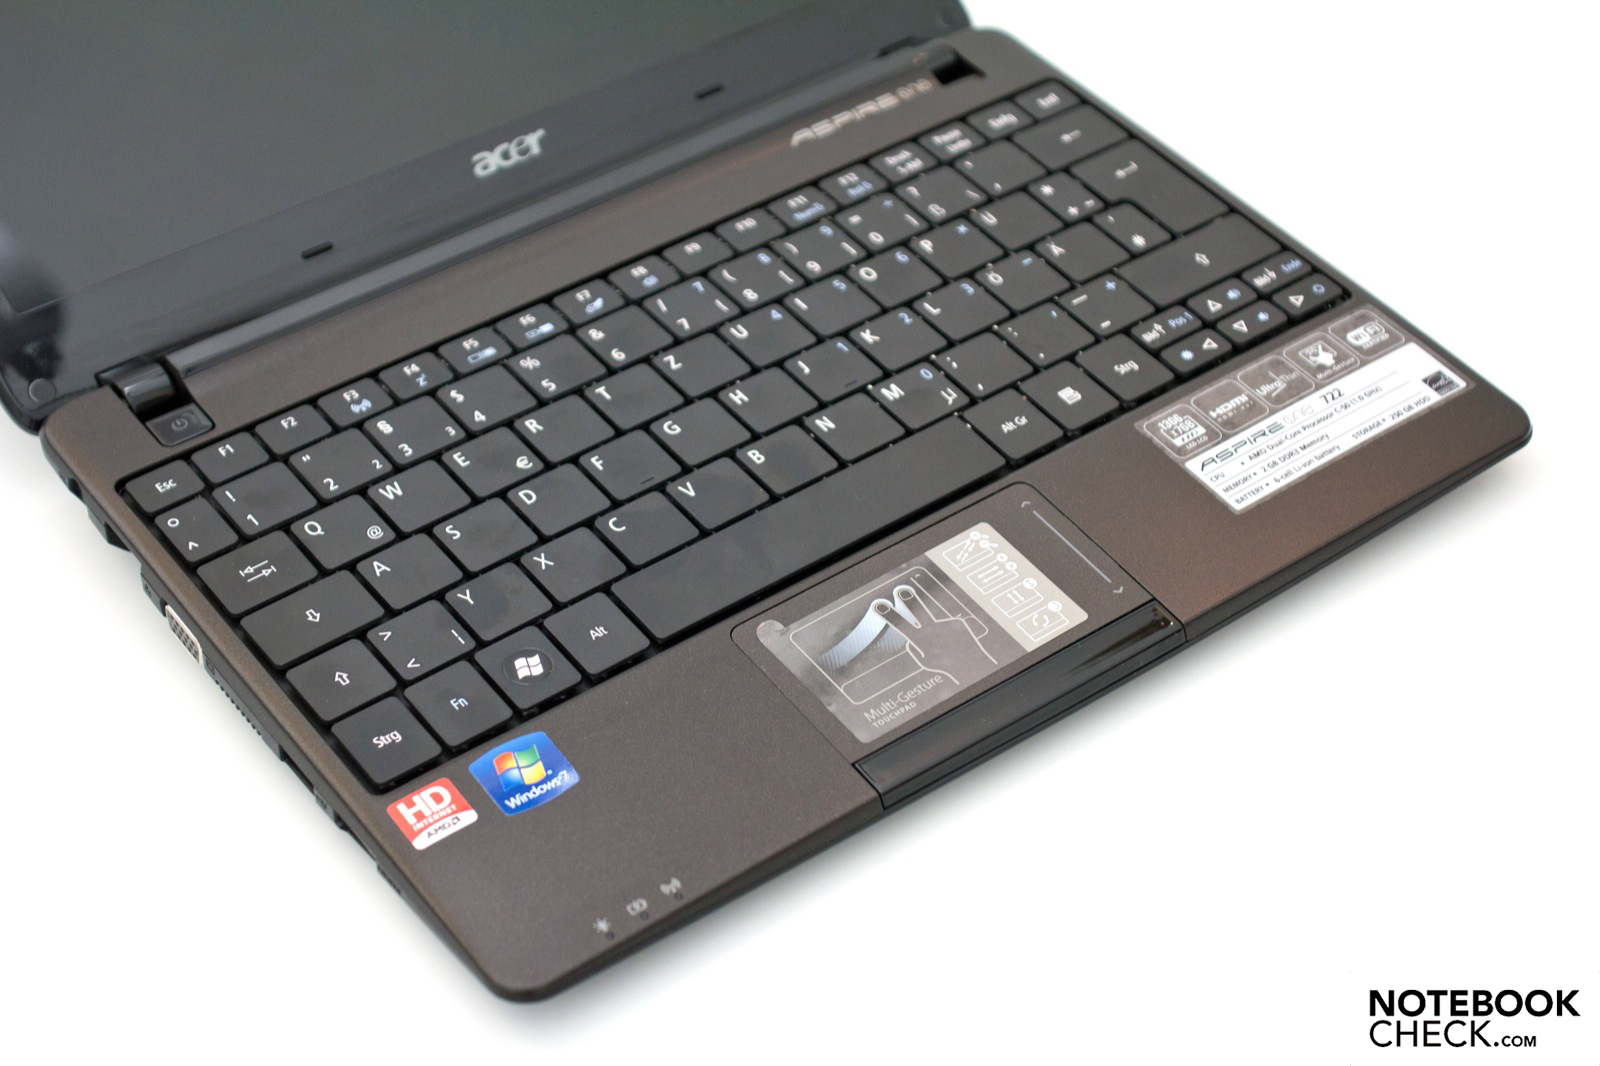 Betasten moeder Kaarsen Review Acer Aspire One 722 Netbook - NotebookCheck.net Reviews